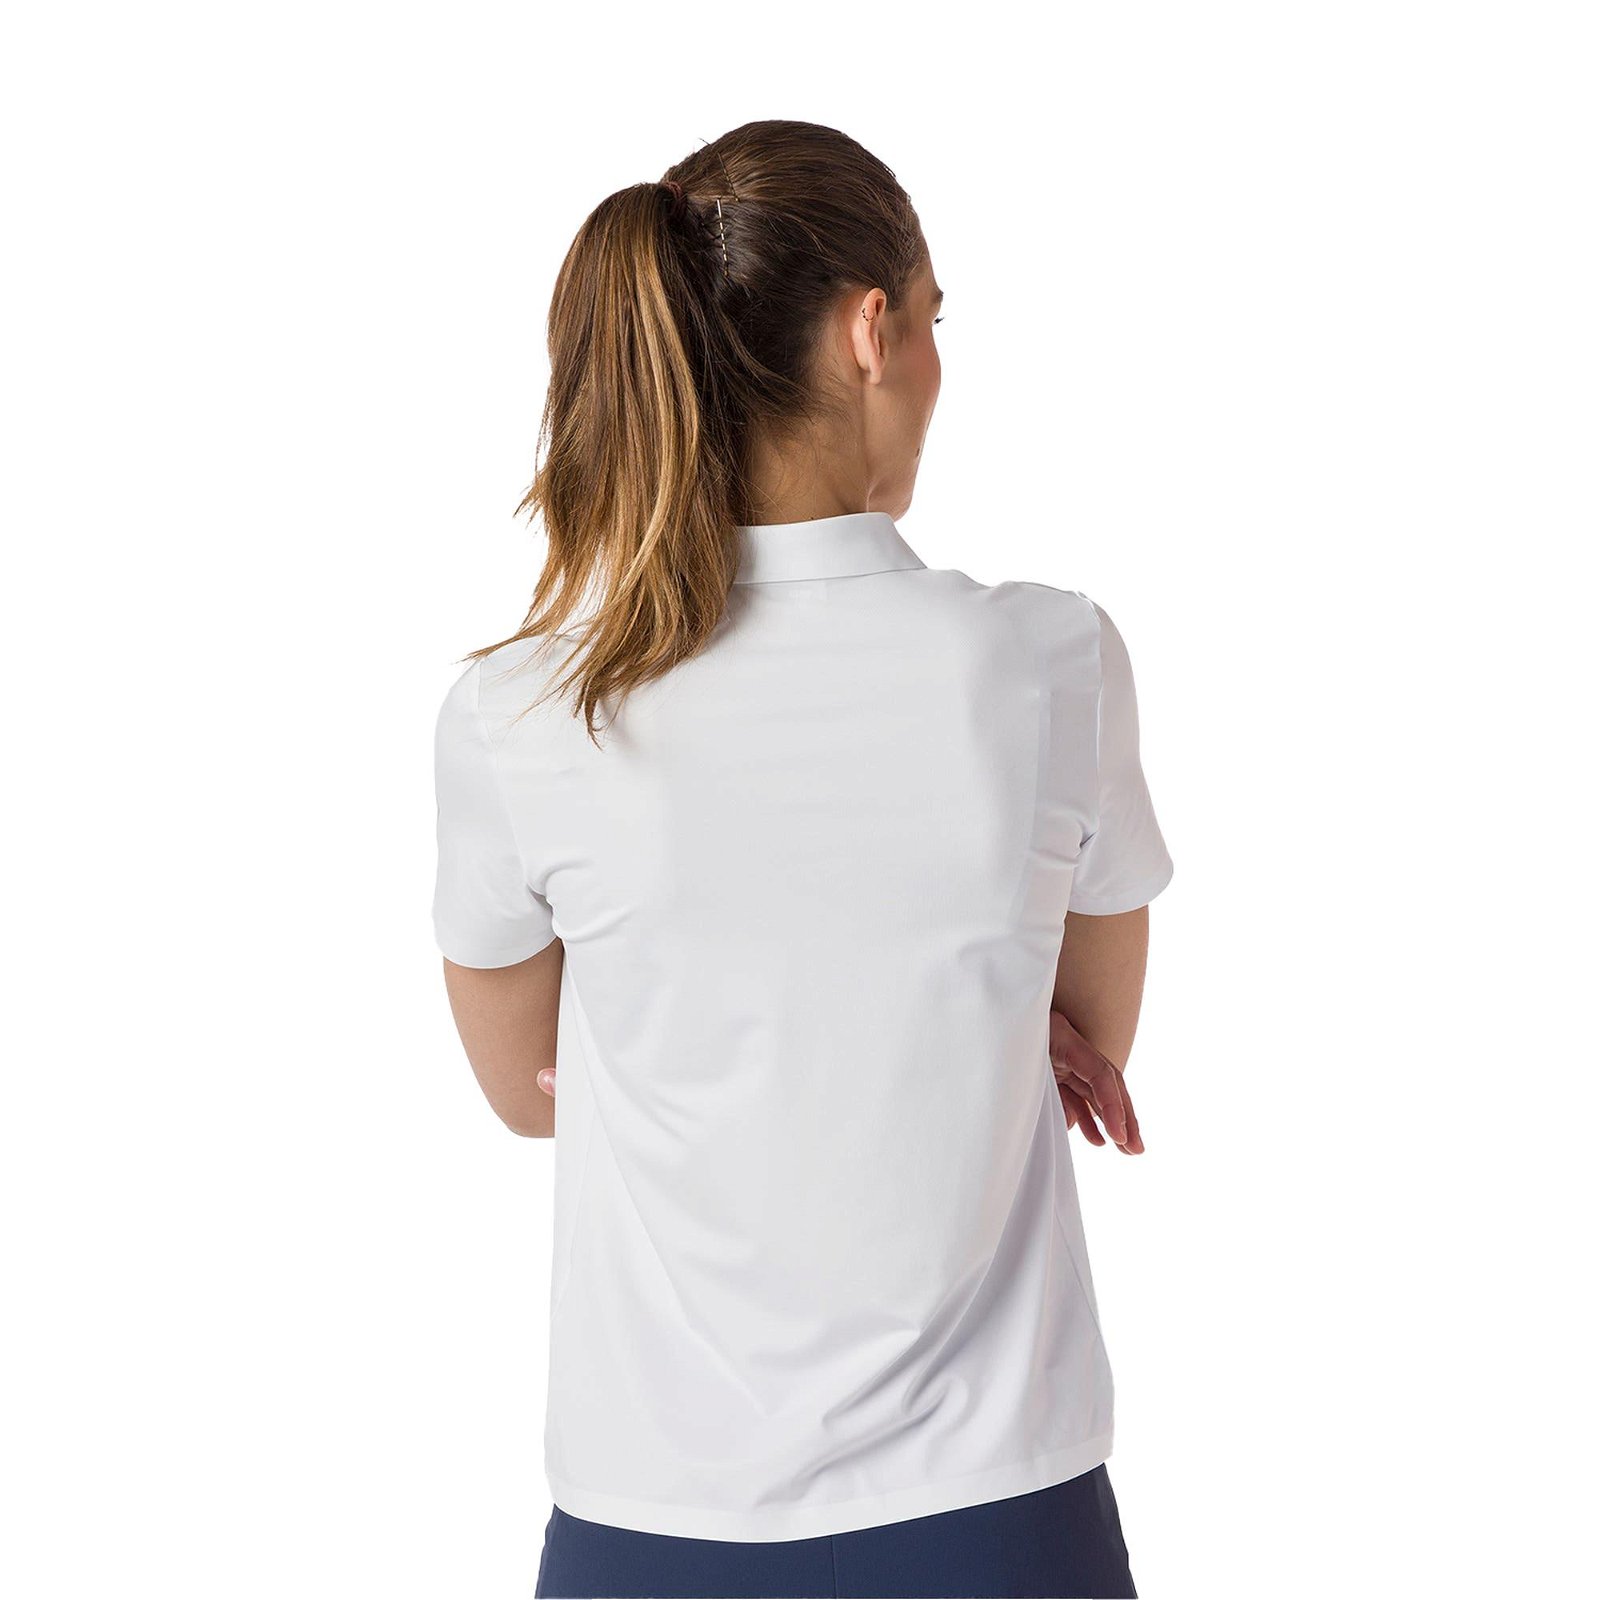 Rossignol Skpr Tech Kadın Polo Tişört